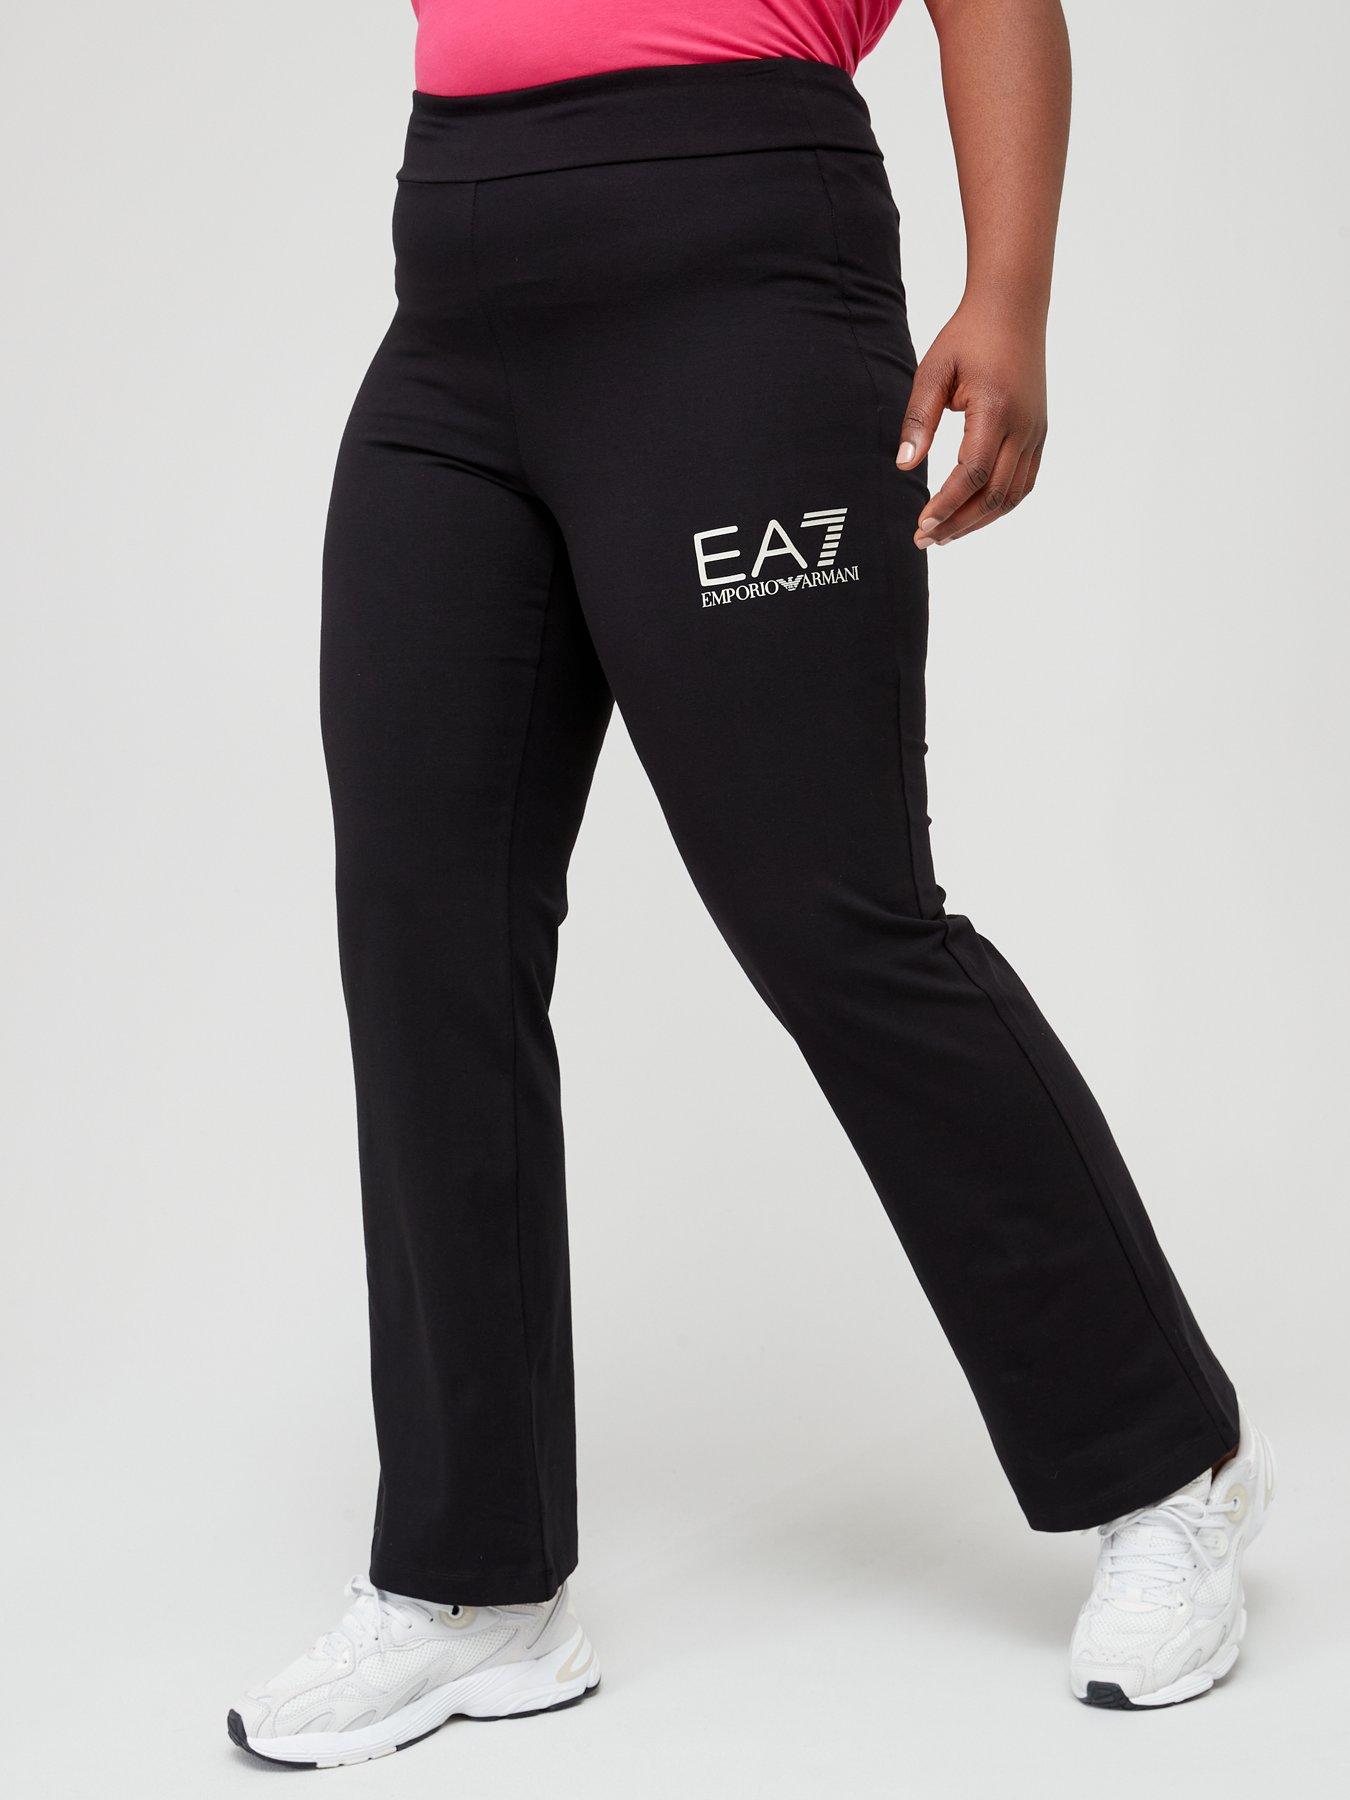 EA7 Emporio Armani Girls Shiny Logo Leggings - Black/Gold